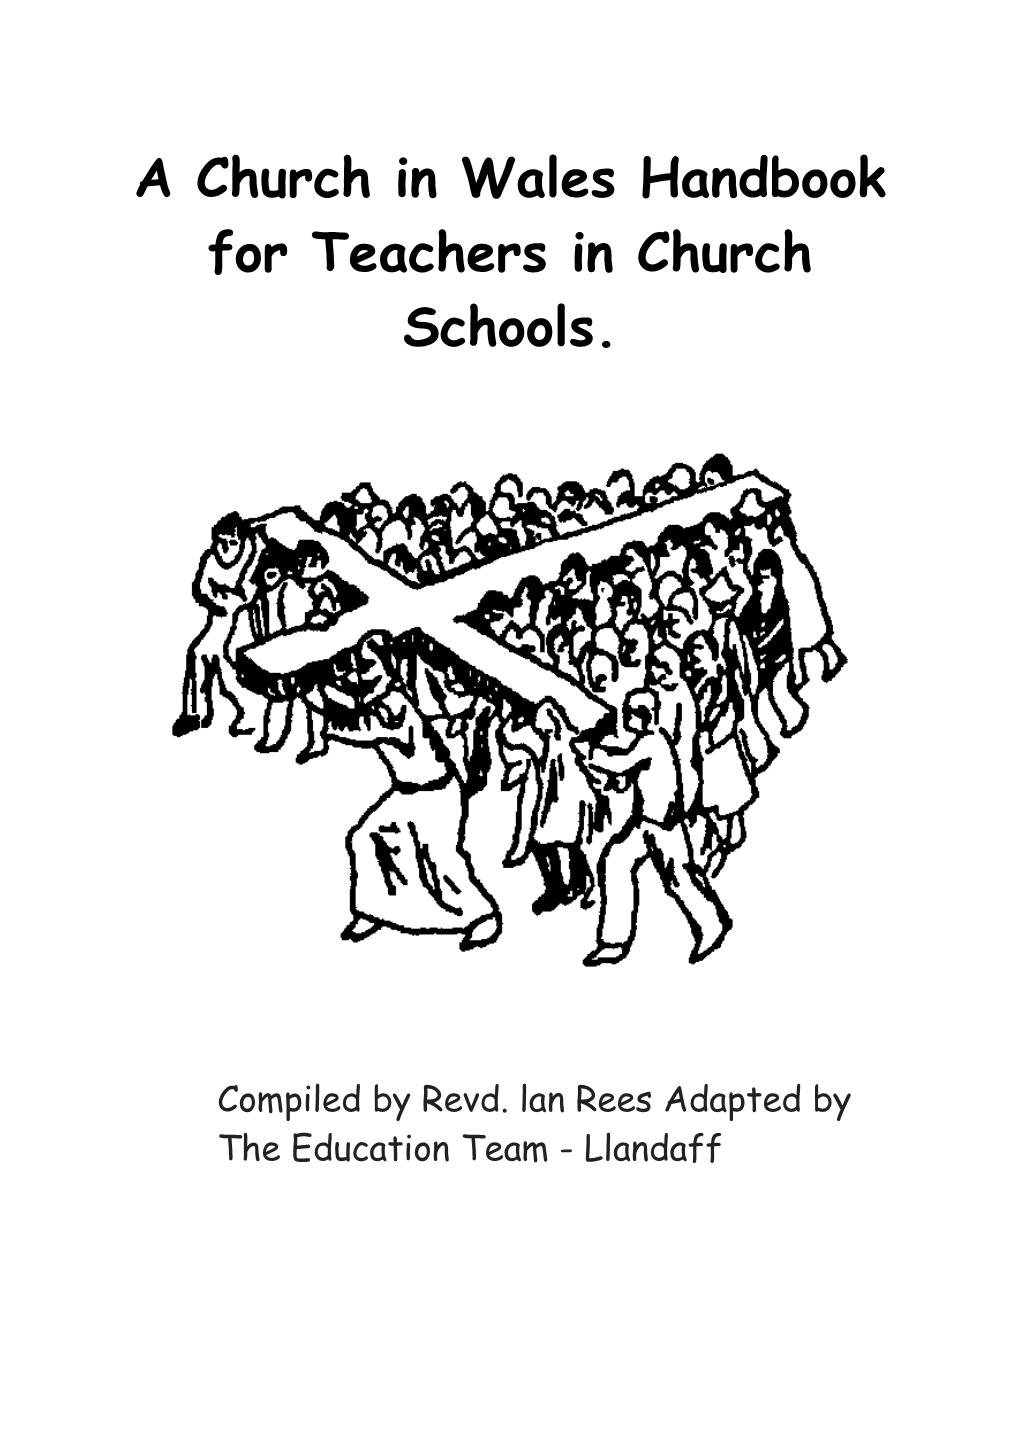 A Church in Wales Handbook for Teachers in Church Schools